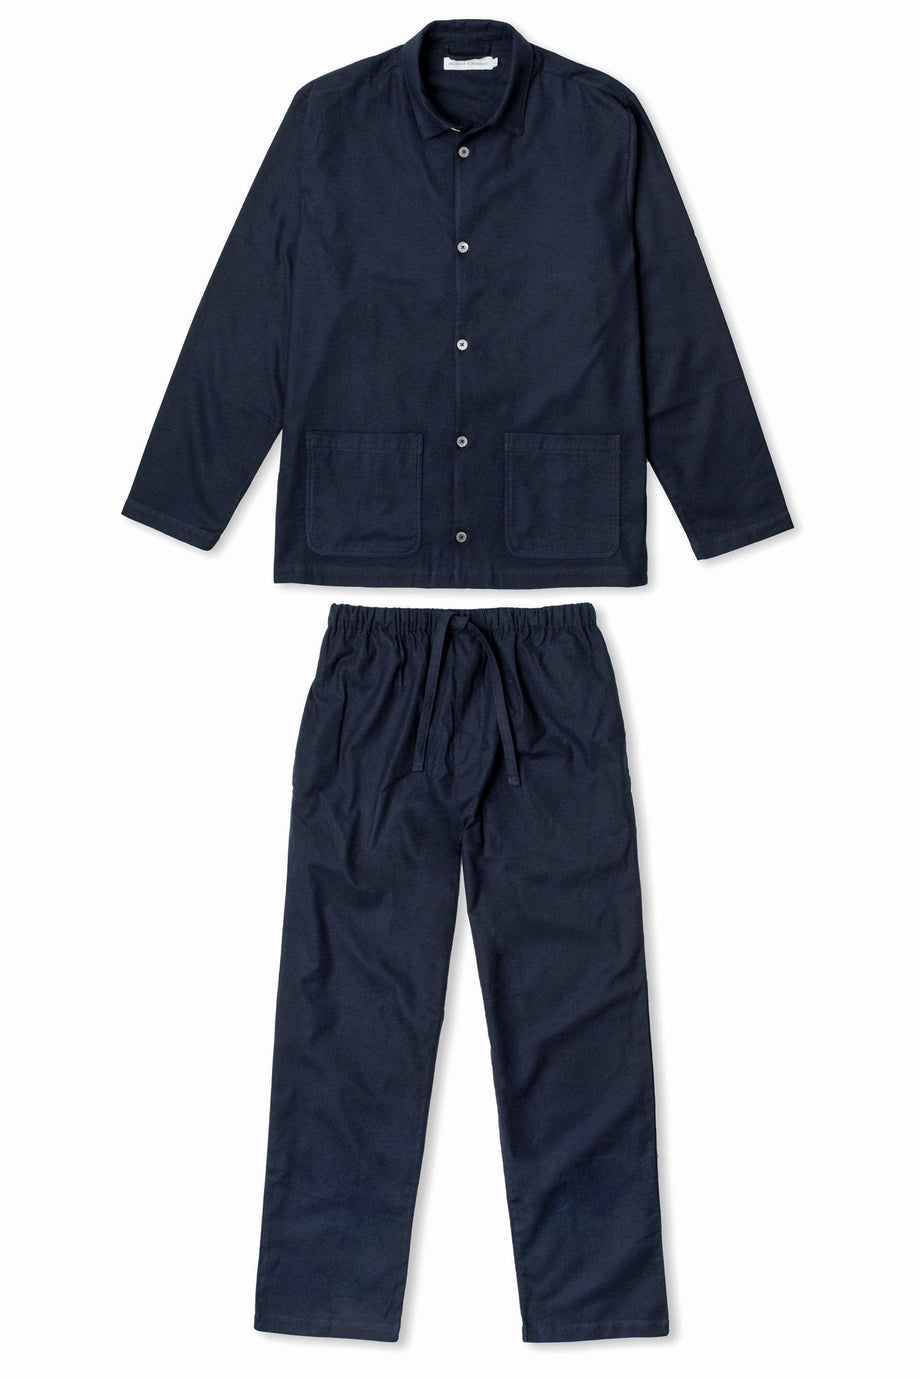 Navy Contrast-stitch brushed-cotton pyjamas, Desmond and Dempsey